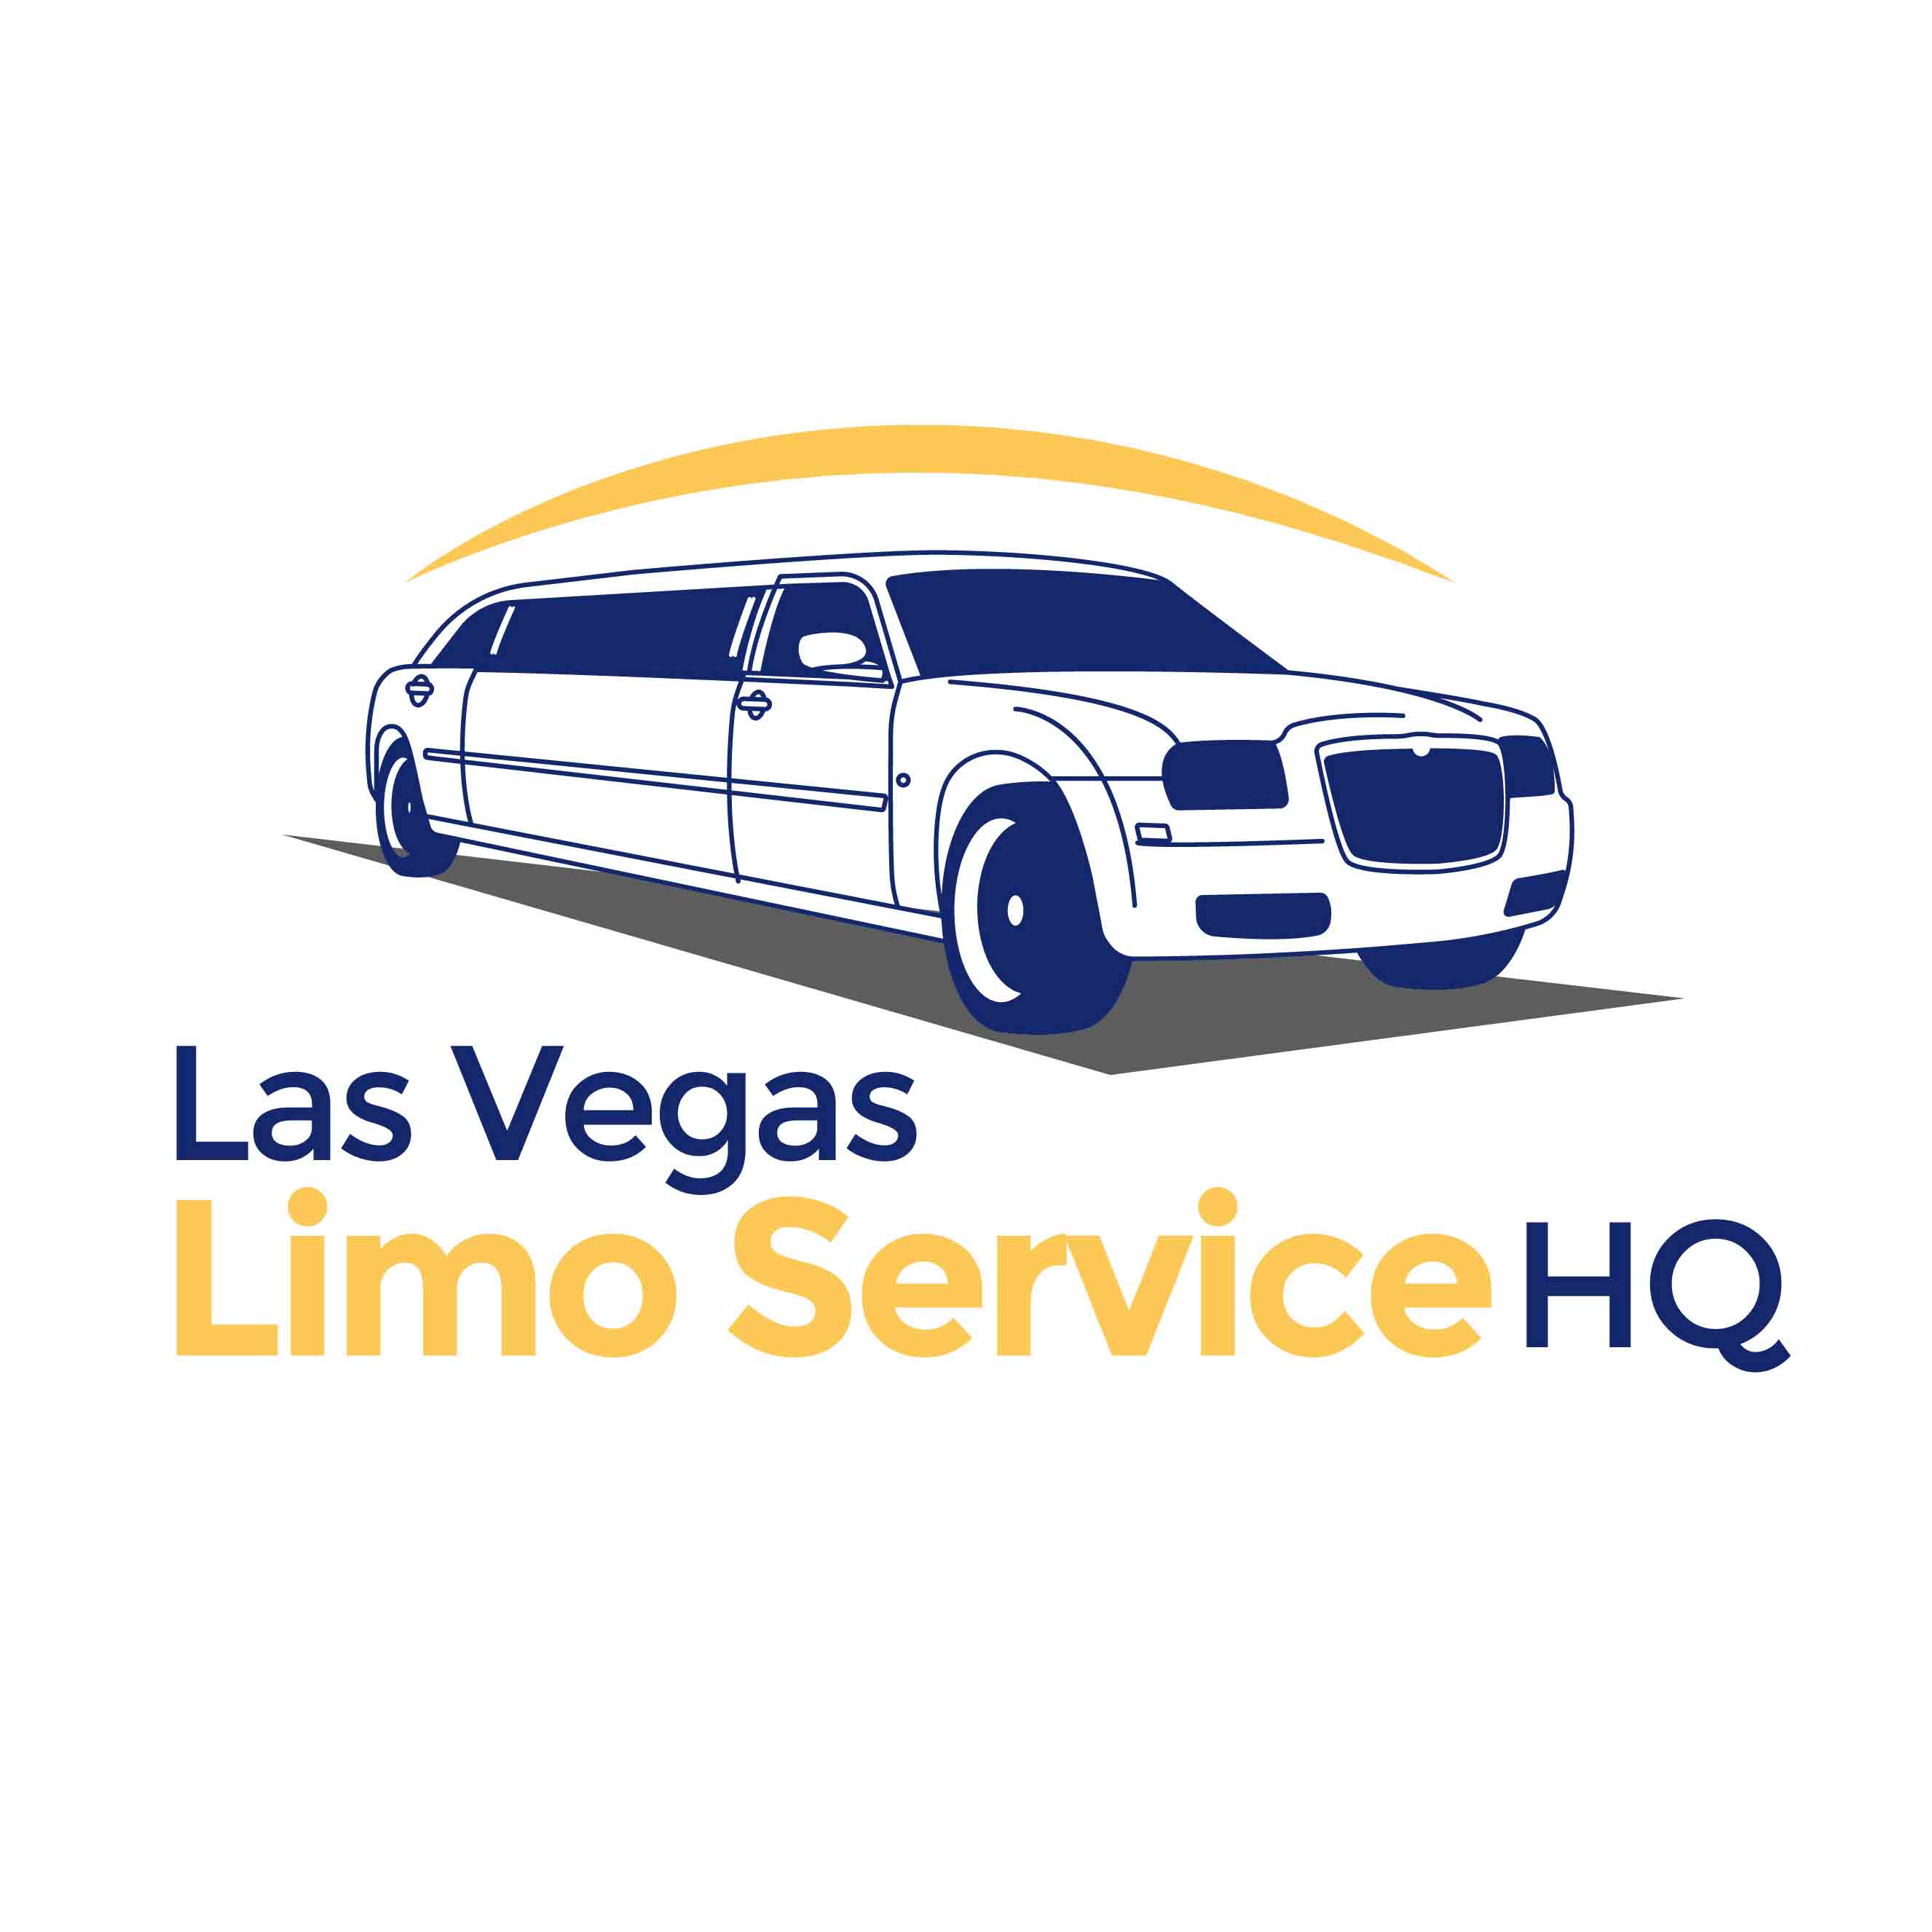 Las Vegas Limo Service HQ